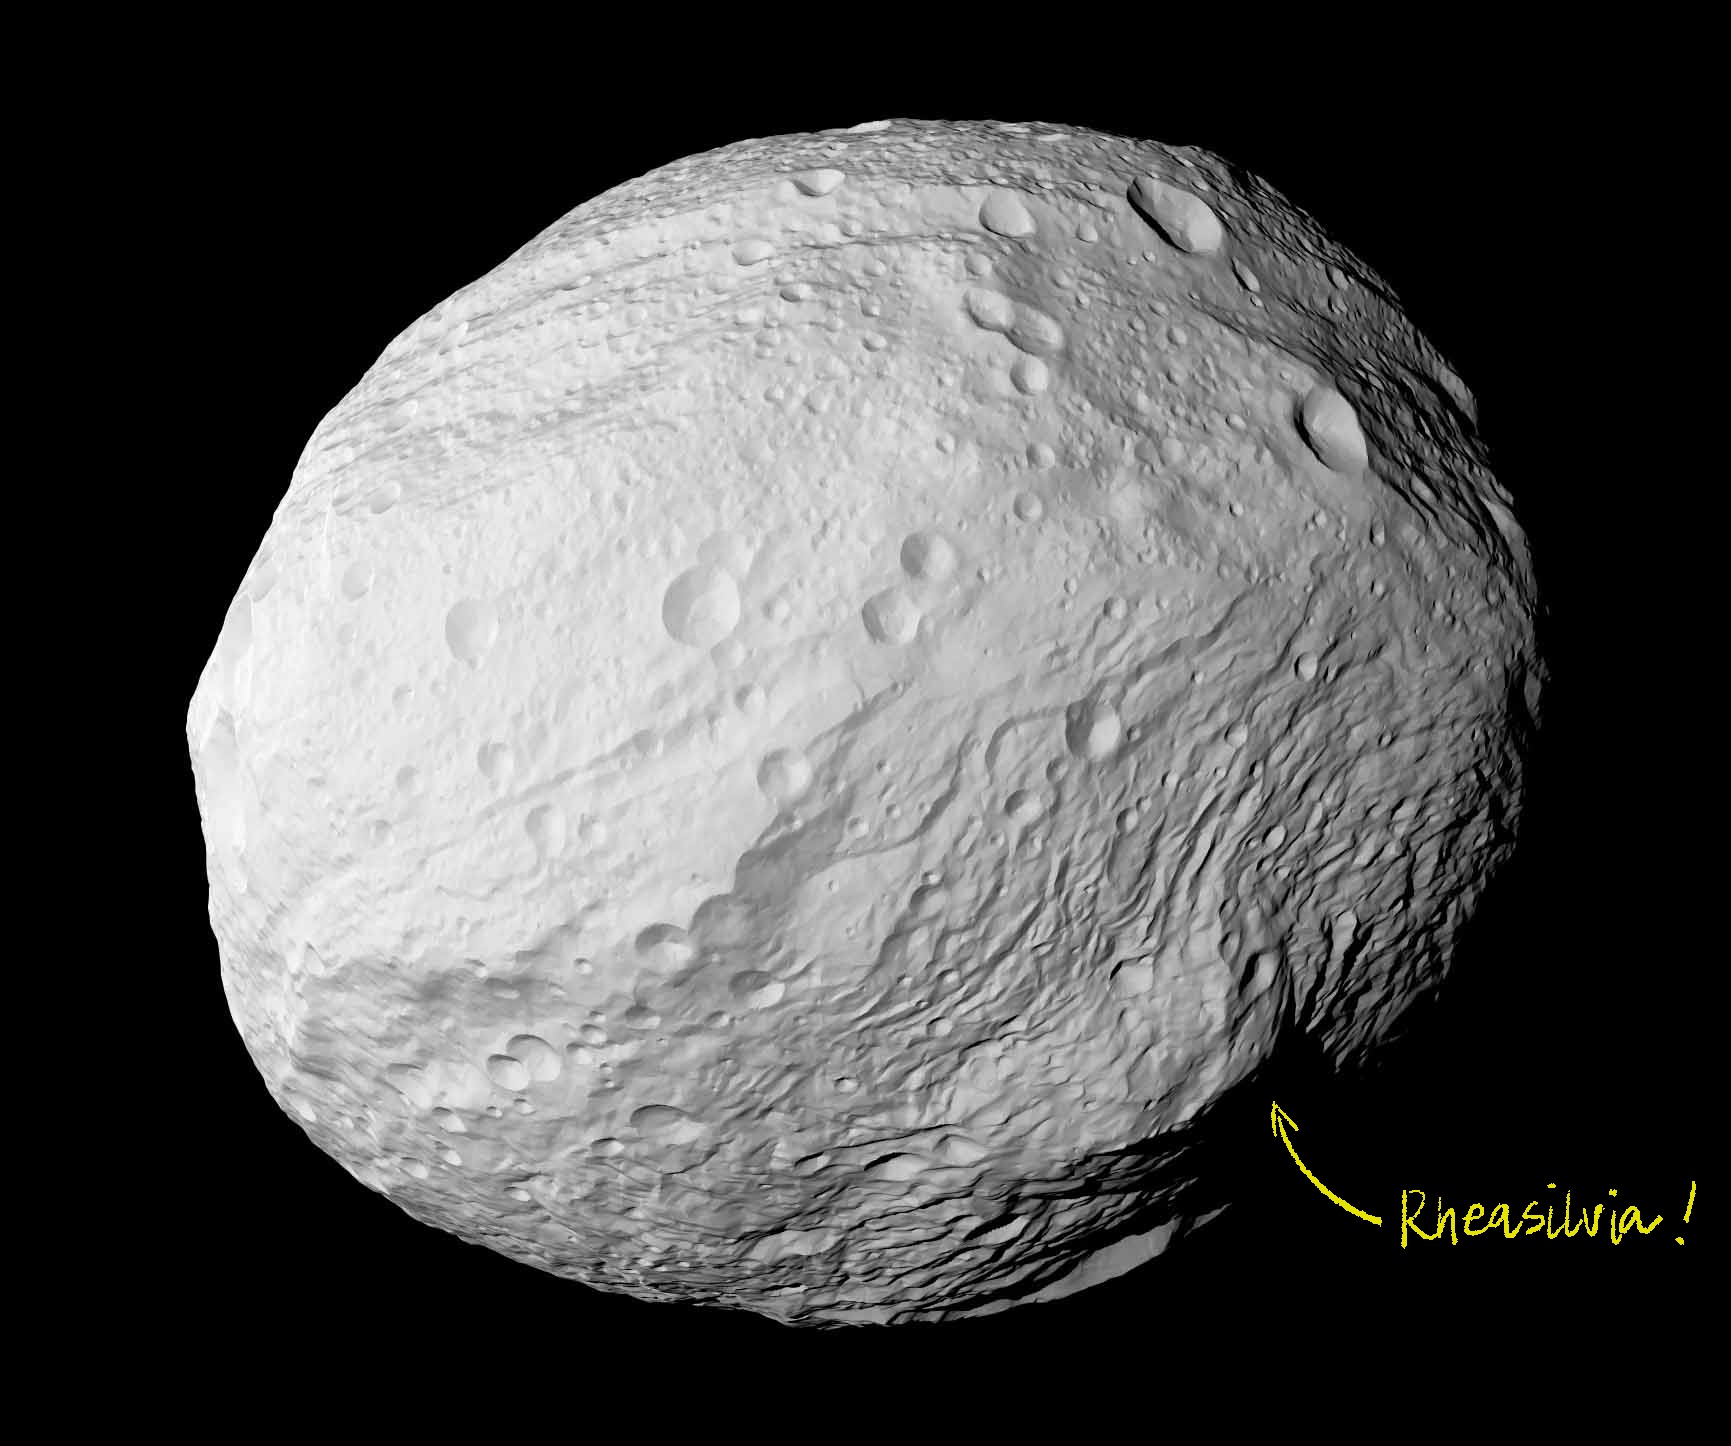 A composite image of Vesta 4, showing Rheasilvia's bump on its south pole.